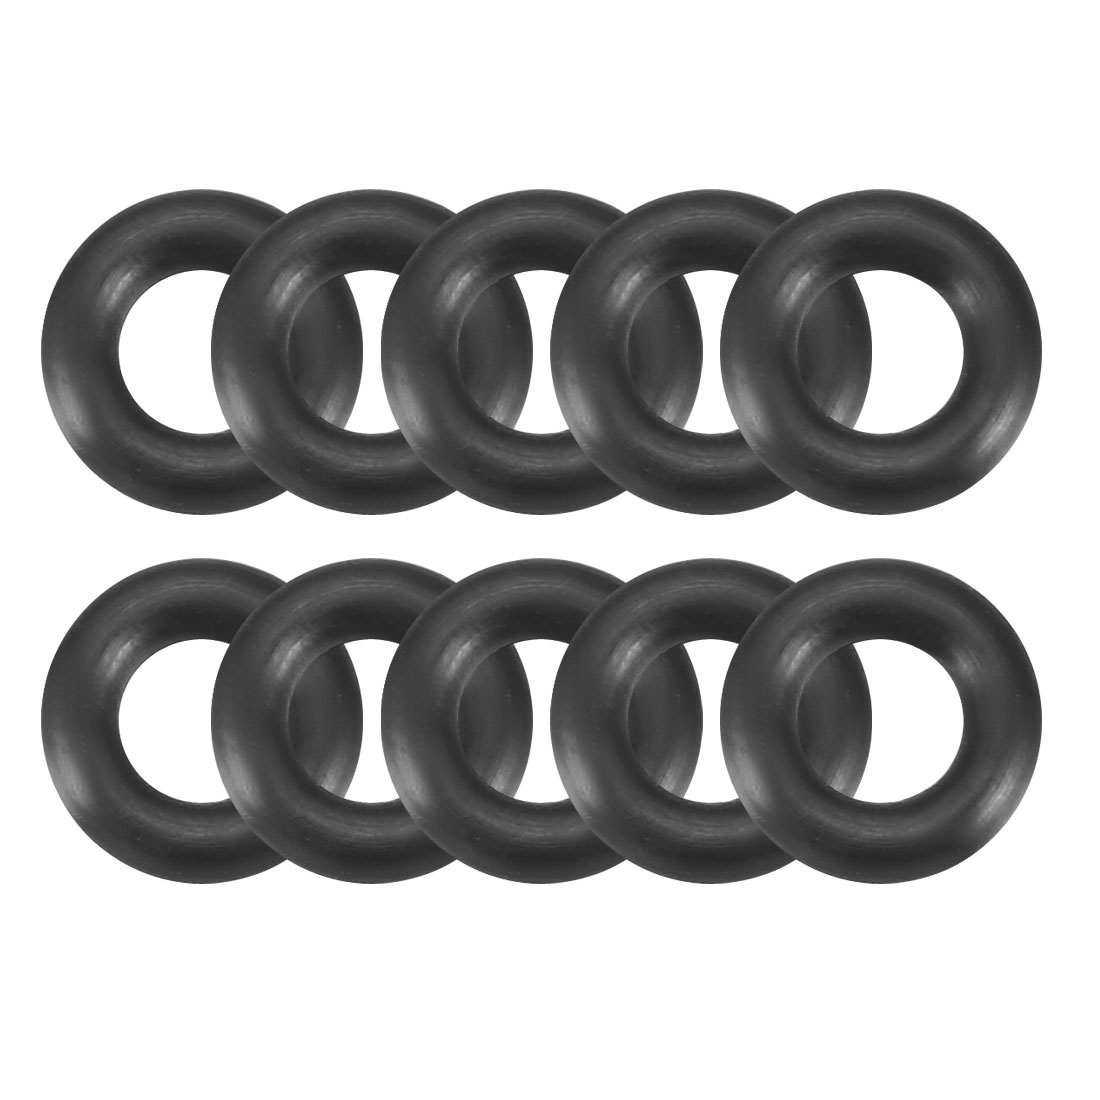 Unique Bargains 10pcs Black Round Nitrile Butadiene Rubber NBR O-Ring 7.5mm OD 1.9mm Width